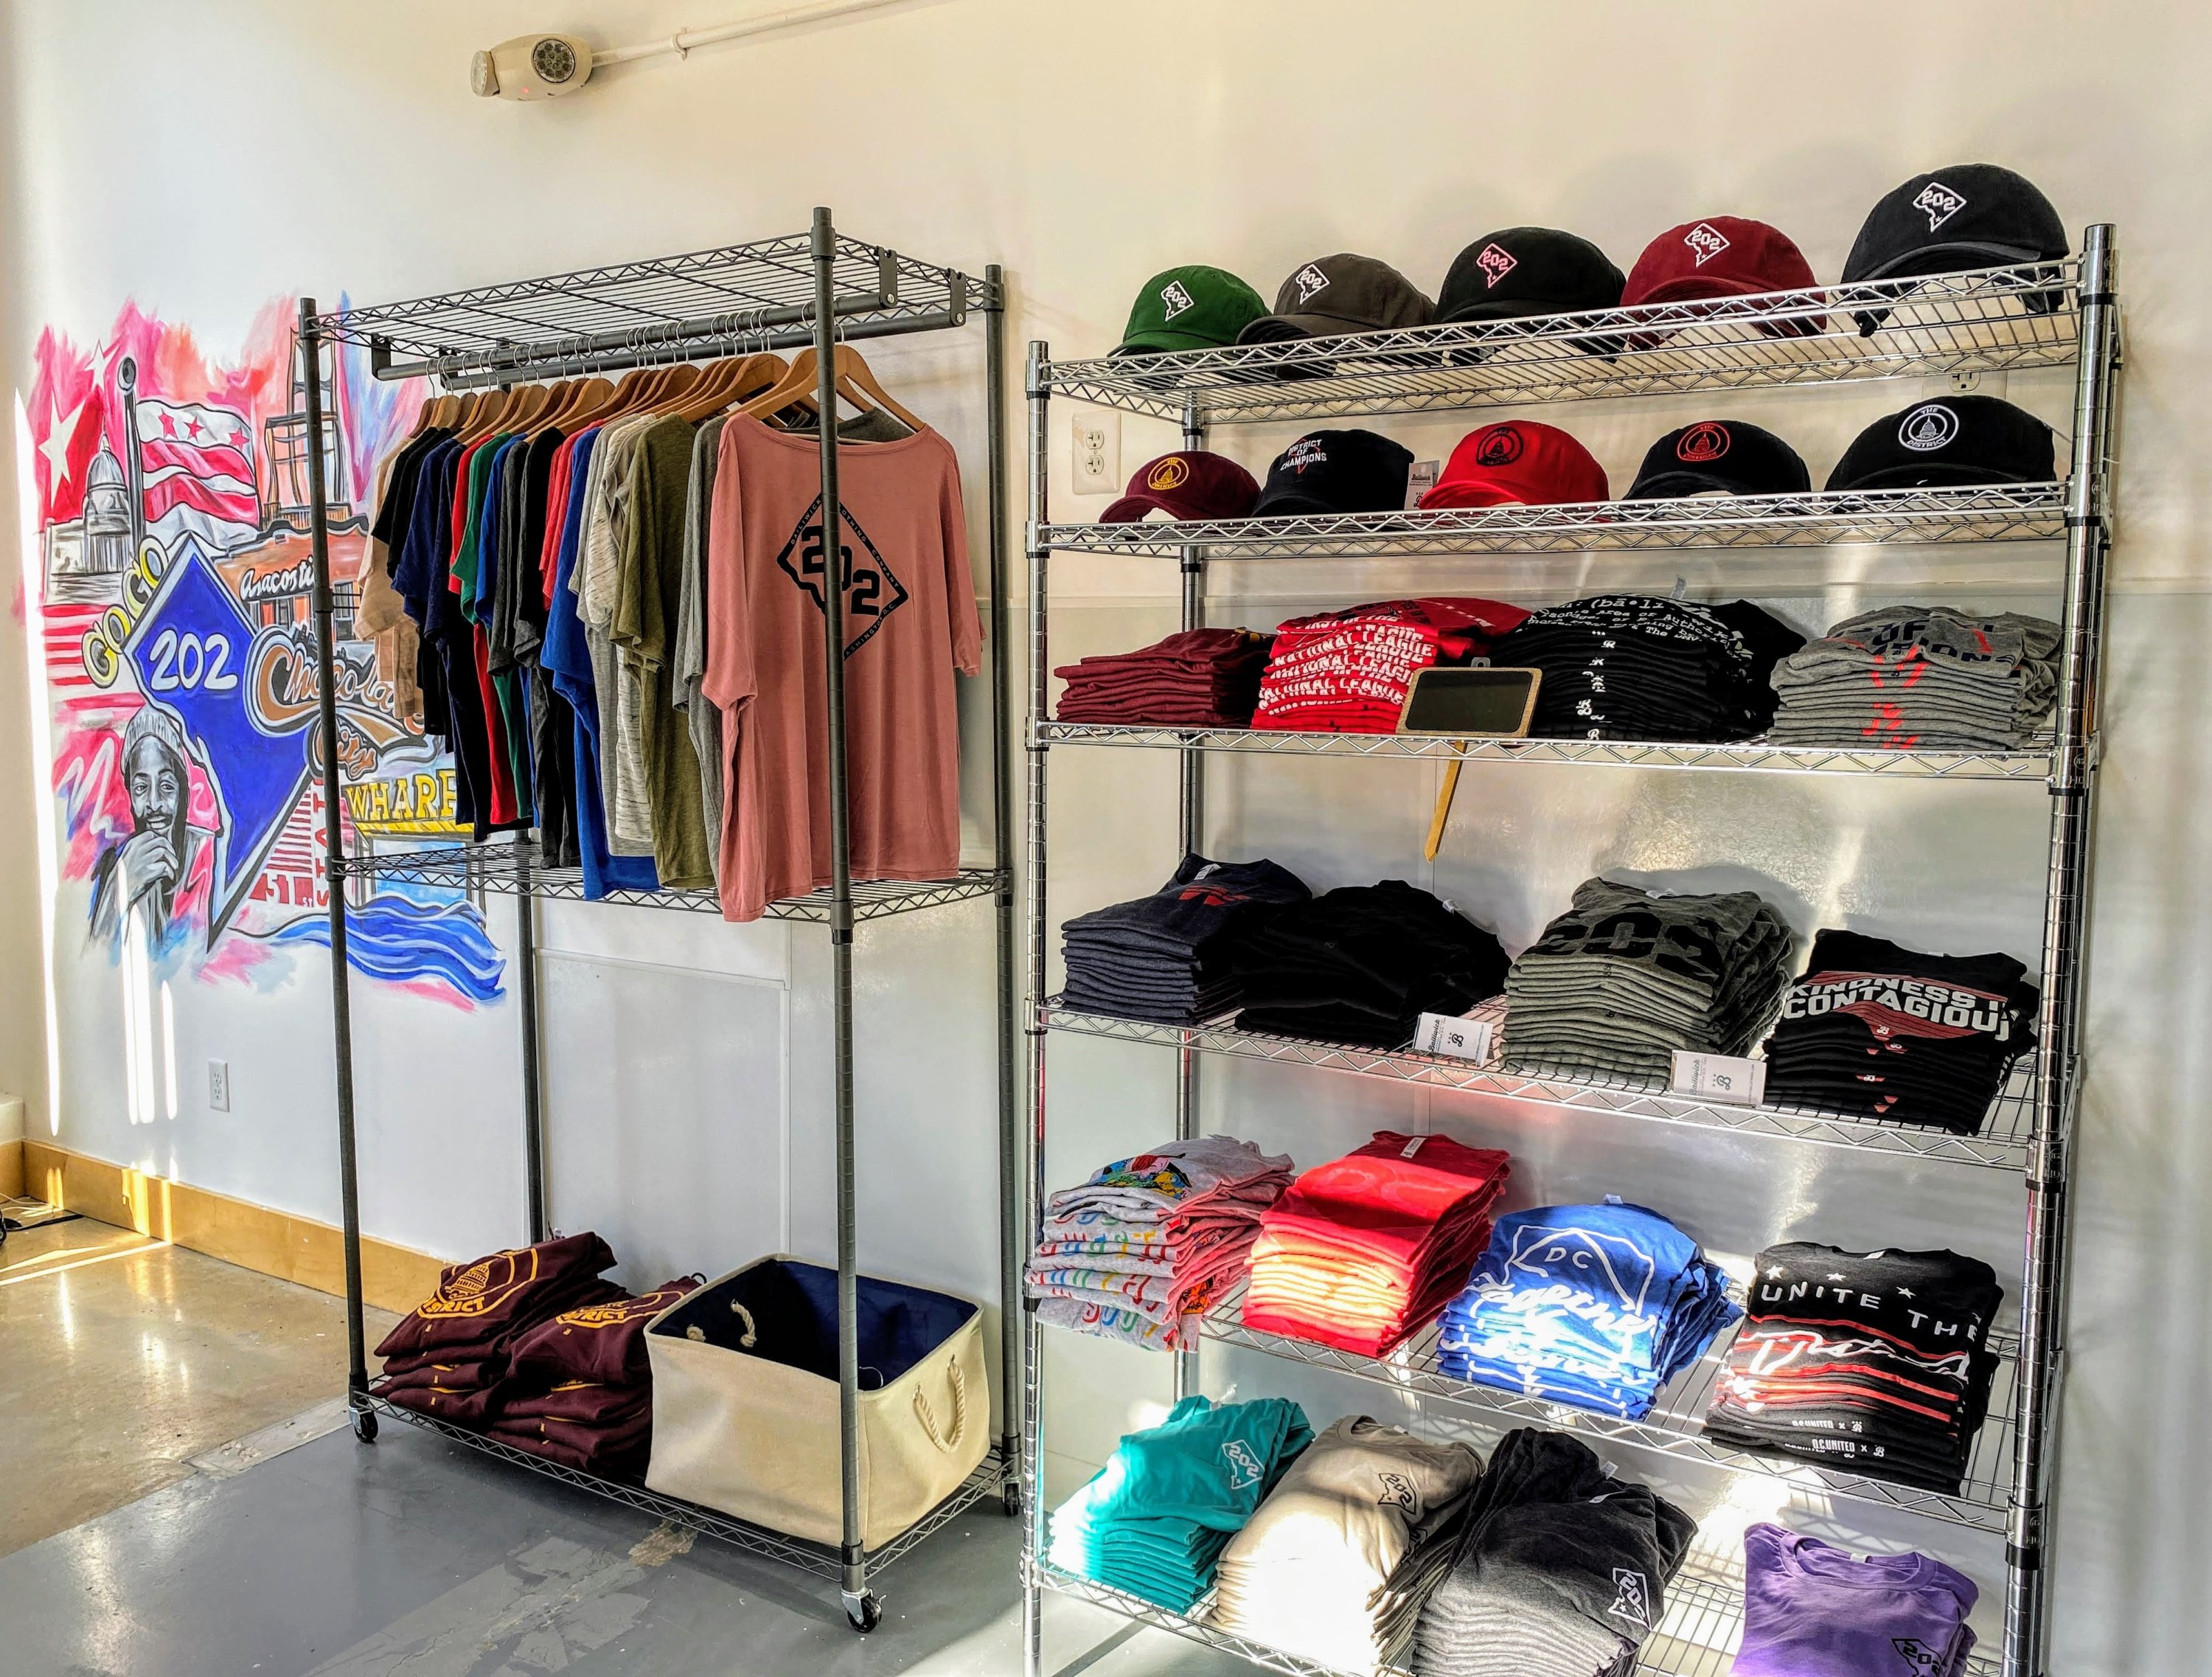 Bailiwick Clothing Company Has Opened a Pop-up Shop at the Wharf -  Washingtonian